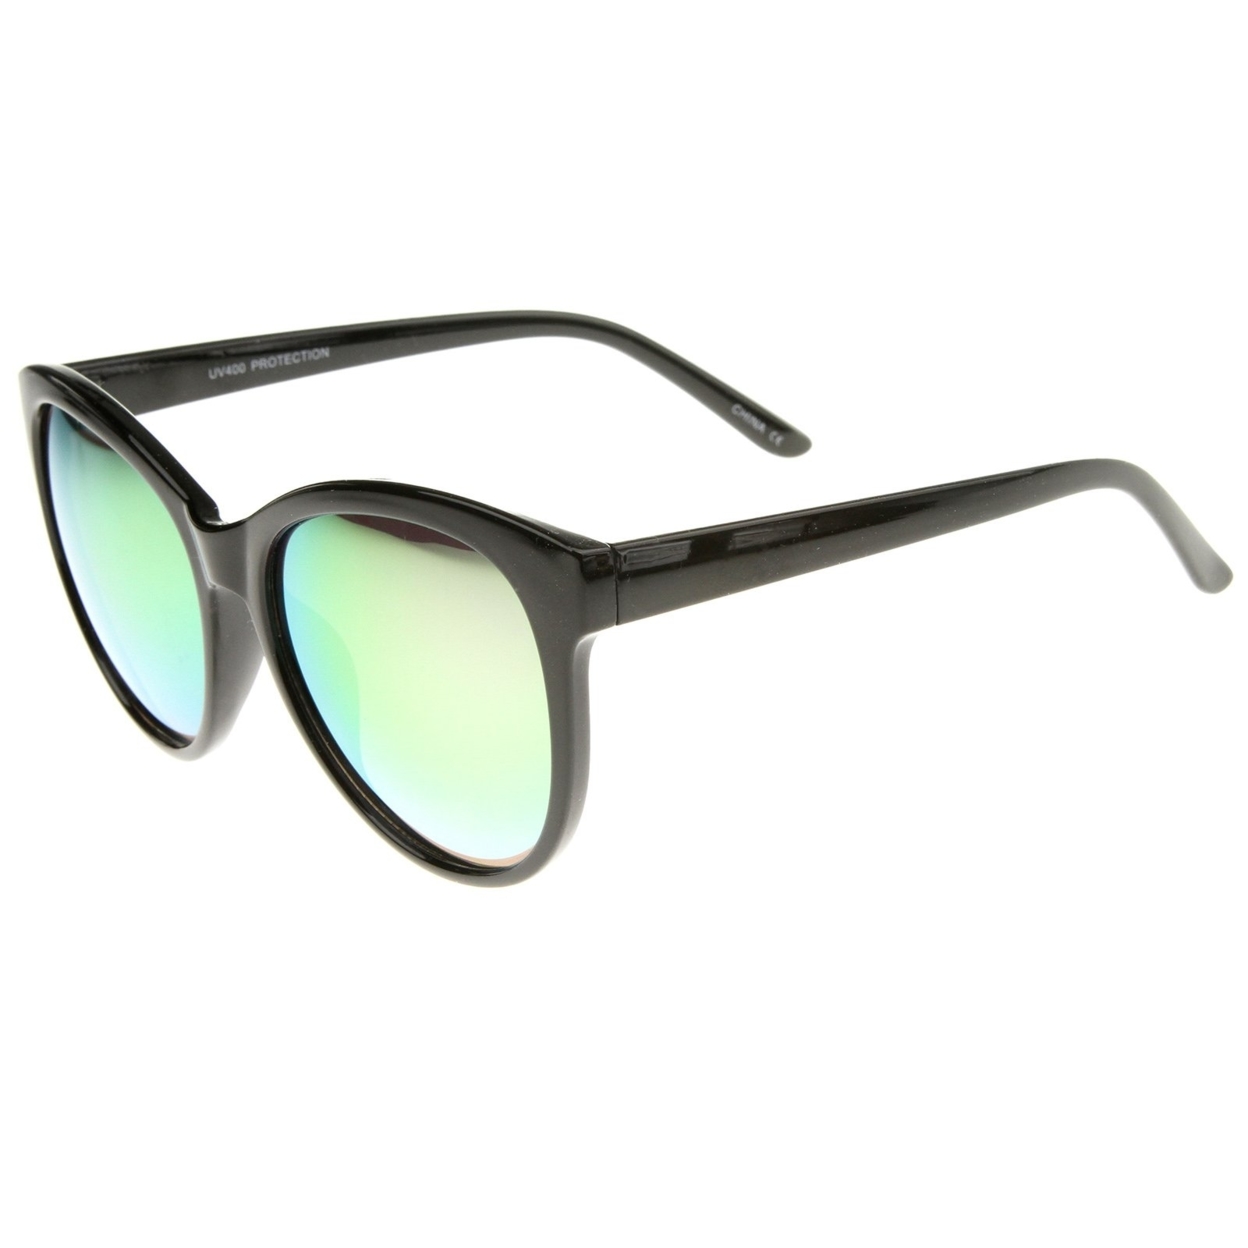 Women's Horn Rimmed Color Mirror Lens Oversized Cat Eye Sunglasses 58mm - Smoke / Magenta Mirror